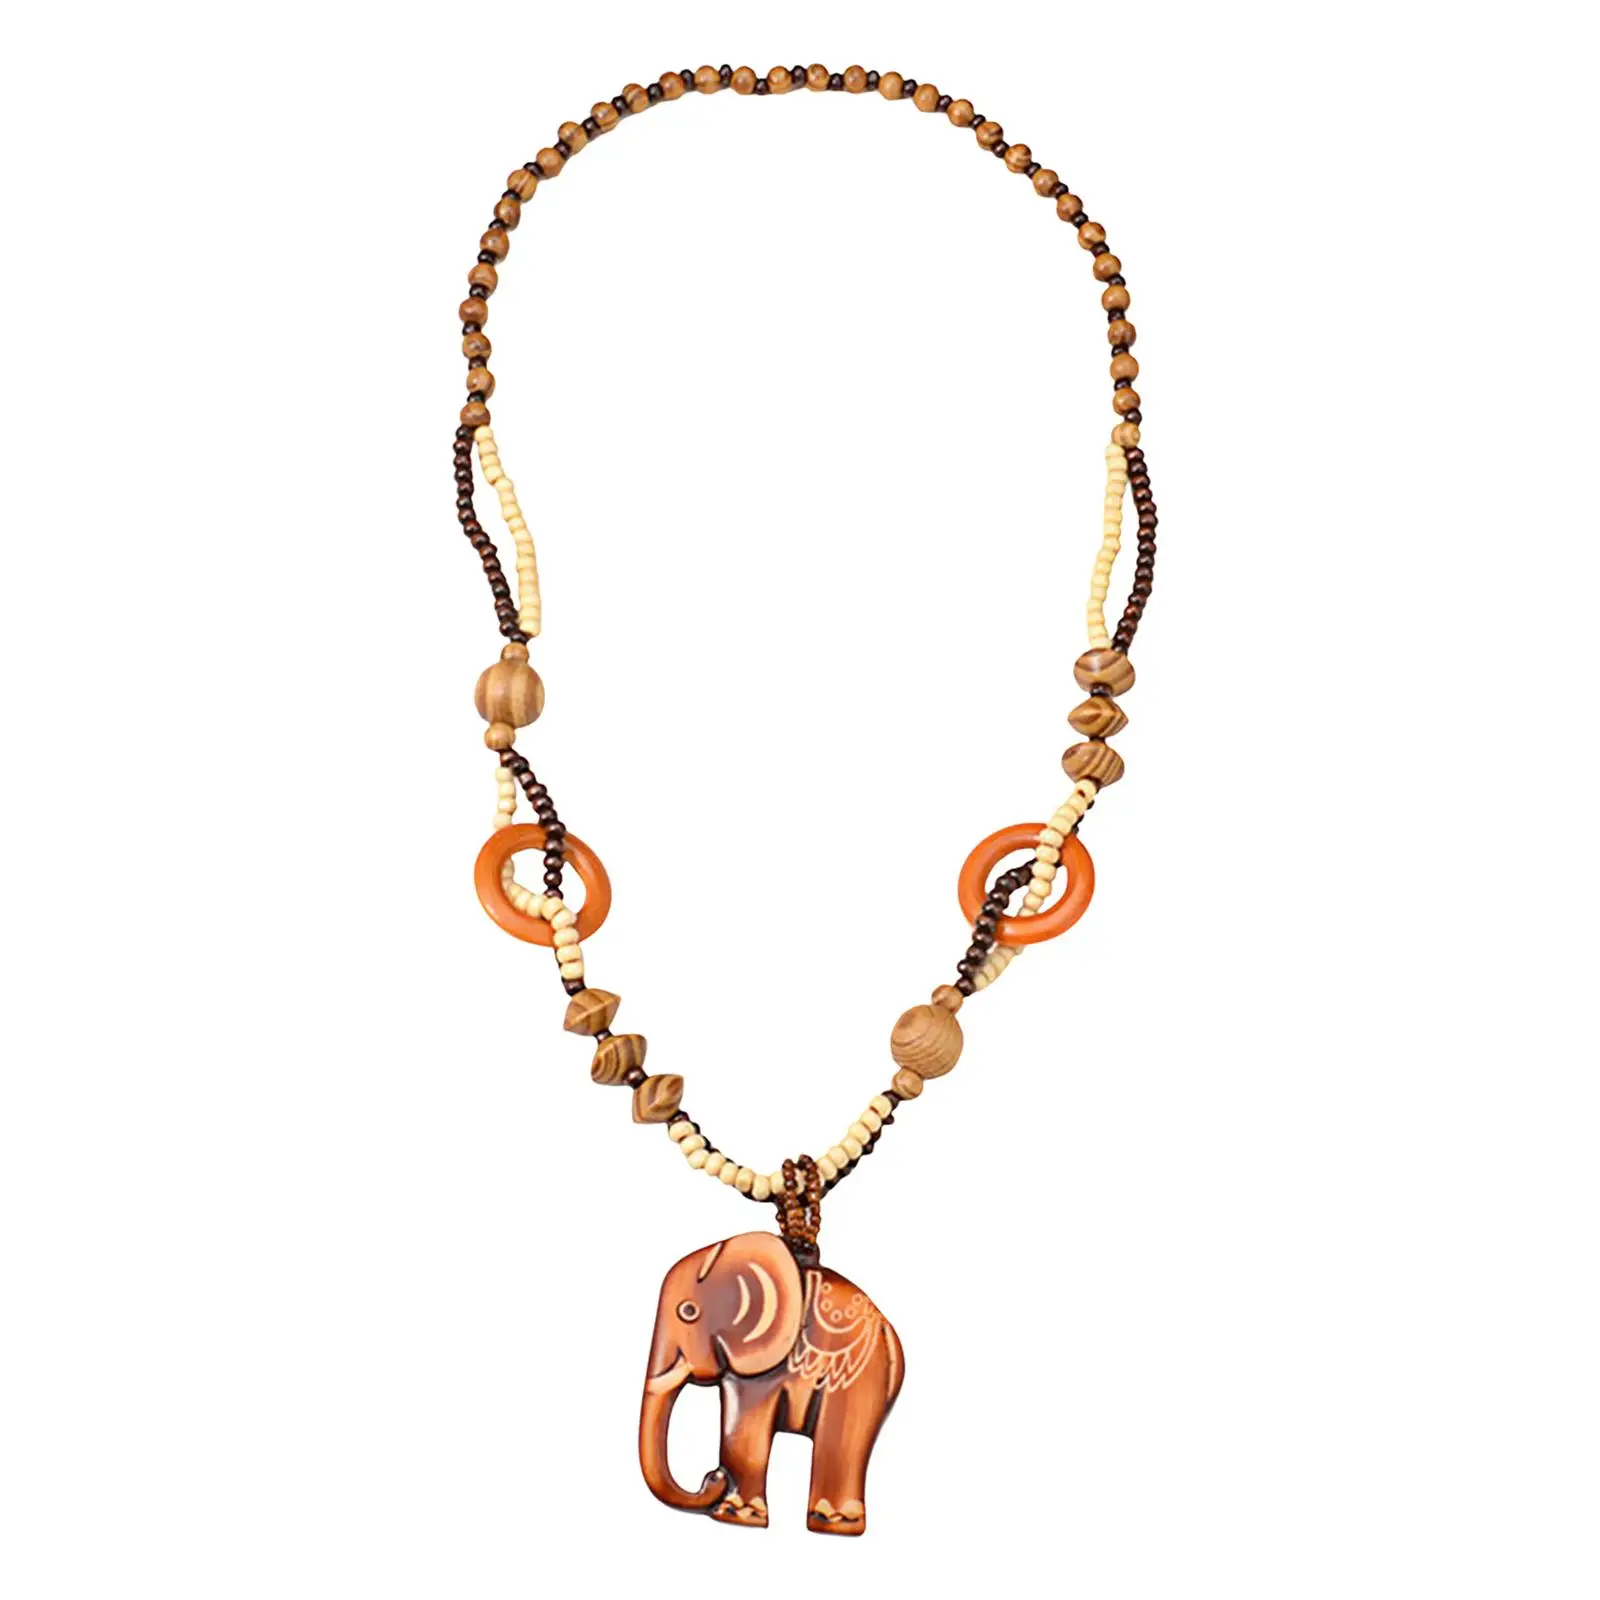 Elephant Pendant Necklaces Wooden Fashion Jewelry for Men Women Unisex Girls